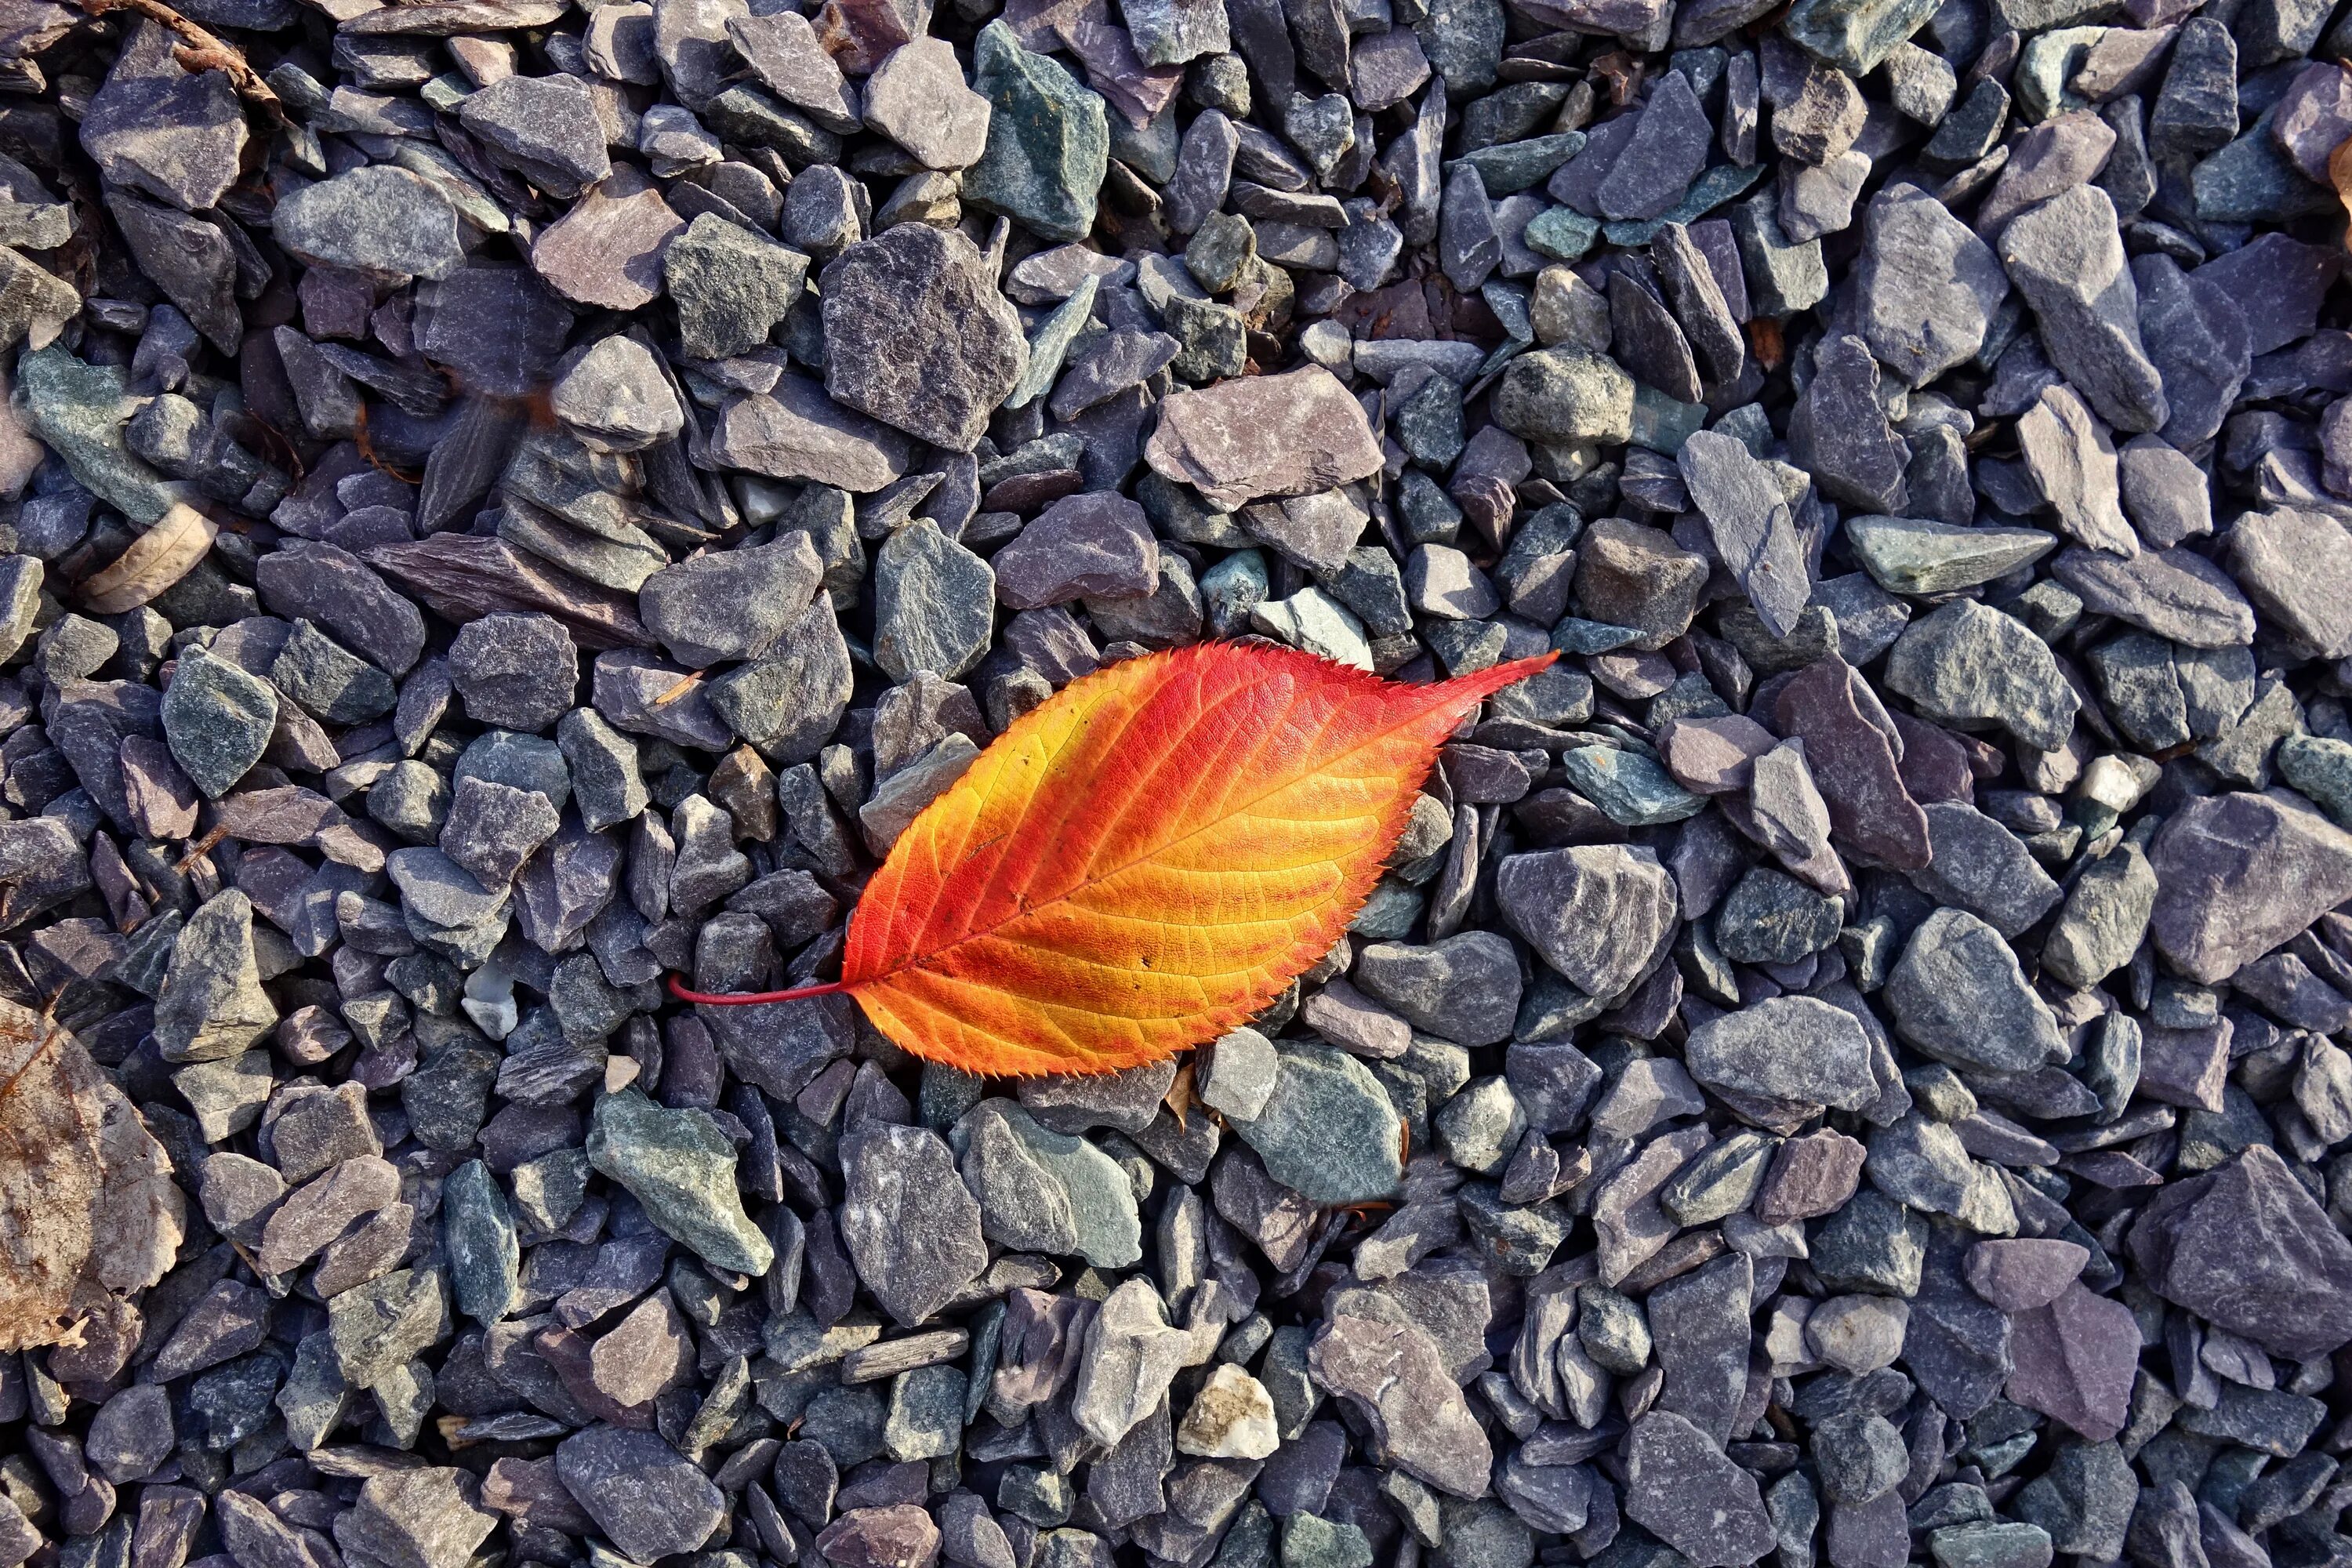 Leaf stone. Листья на камнях. Осенние камни. Осенние листья на камнях. Каменный лист.